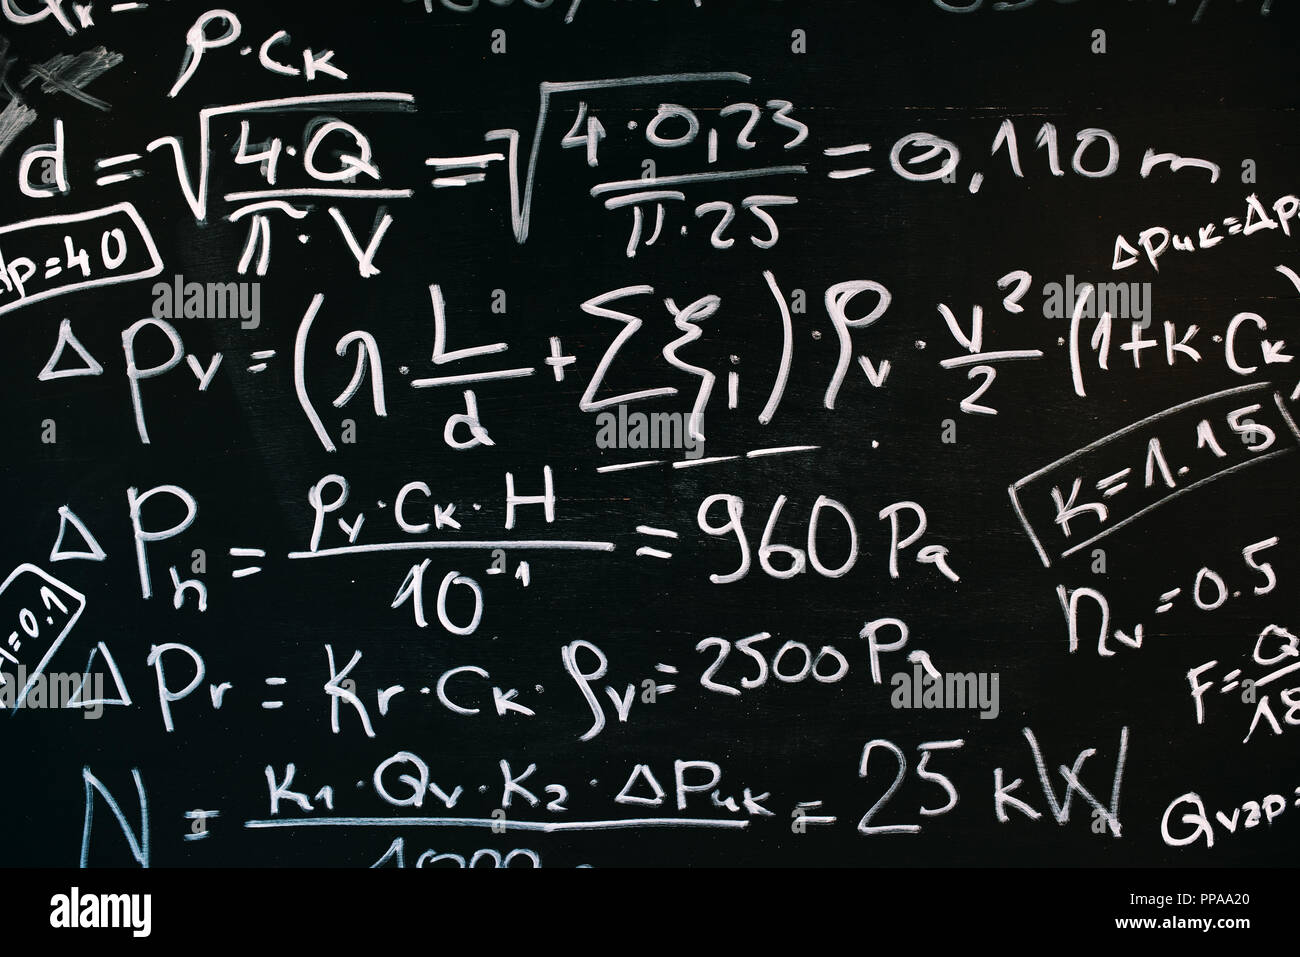 Thermal processes physics equations pn school blackboard Stock Photo